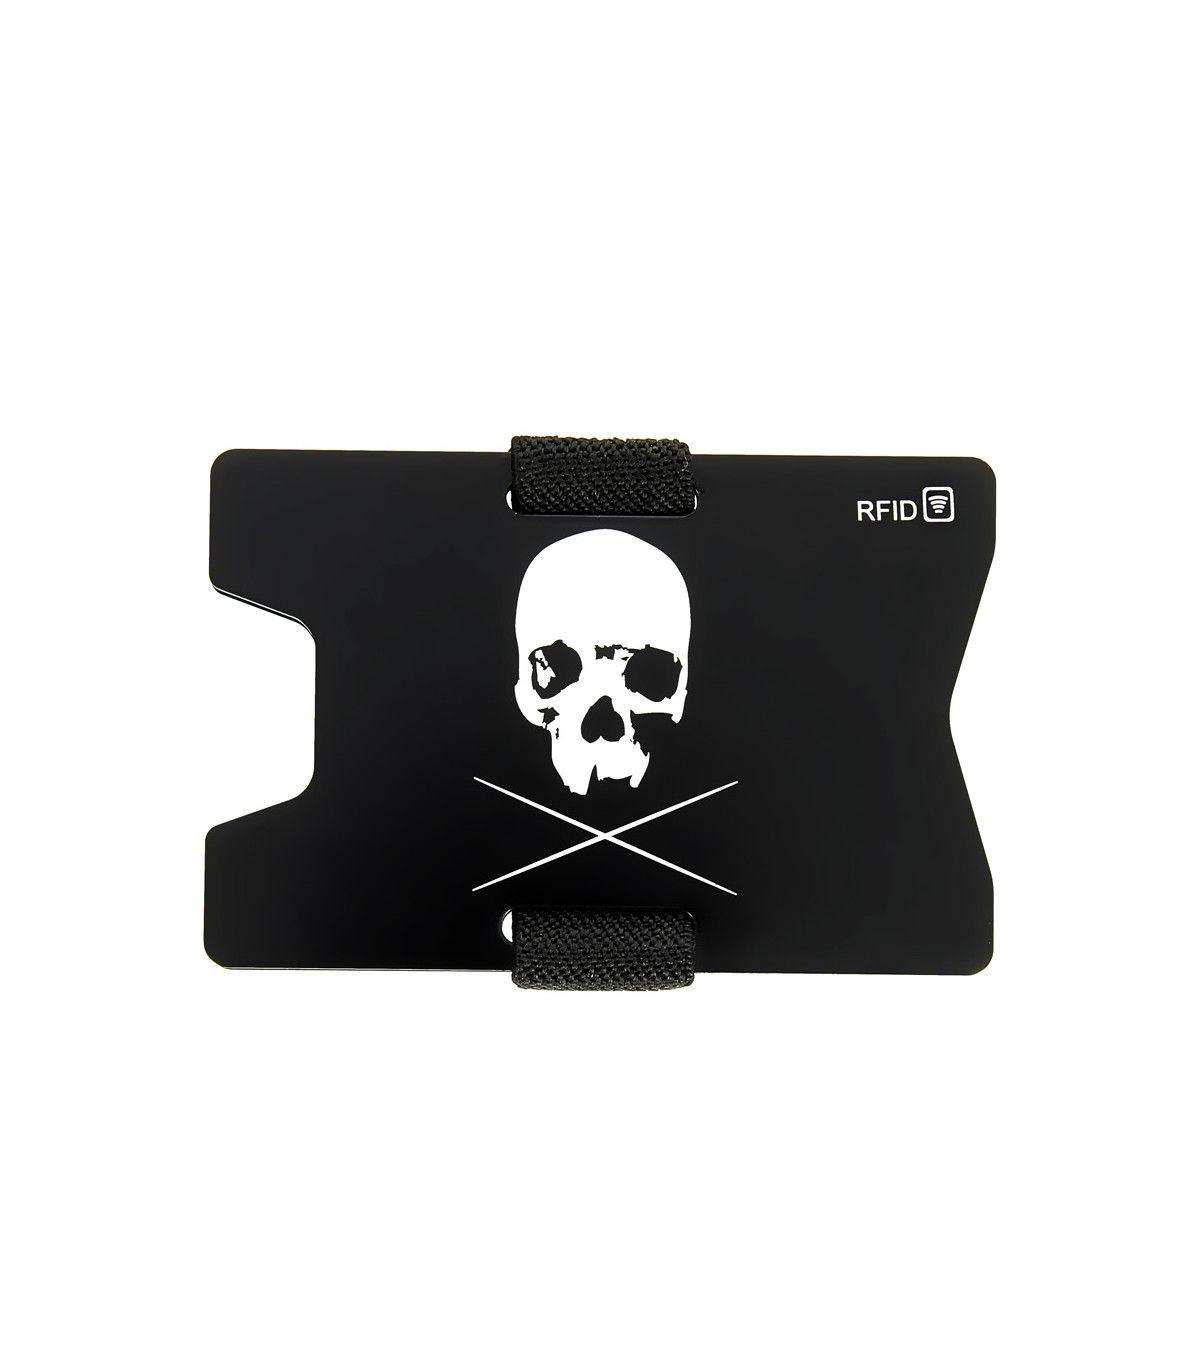 RFID Logo - Anti RFID card holder with skull logo - Flibustier Paris